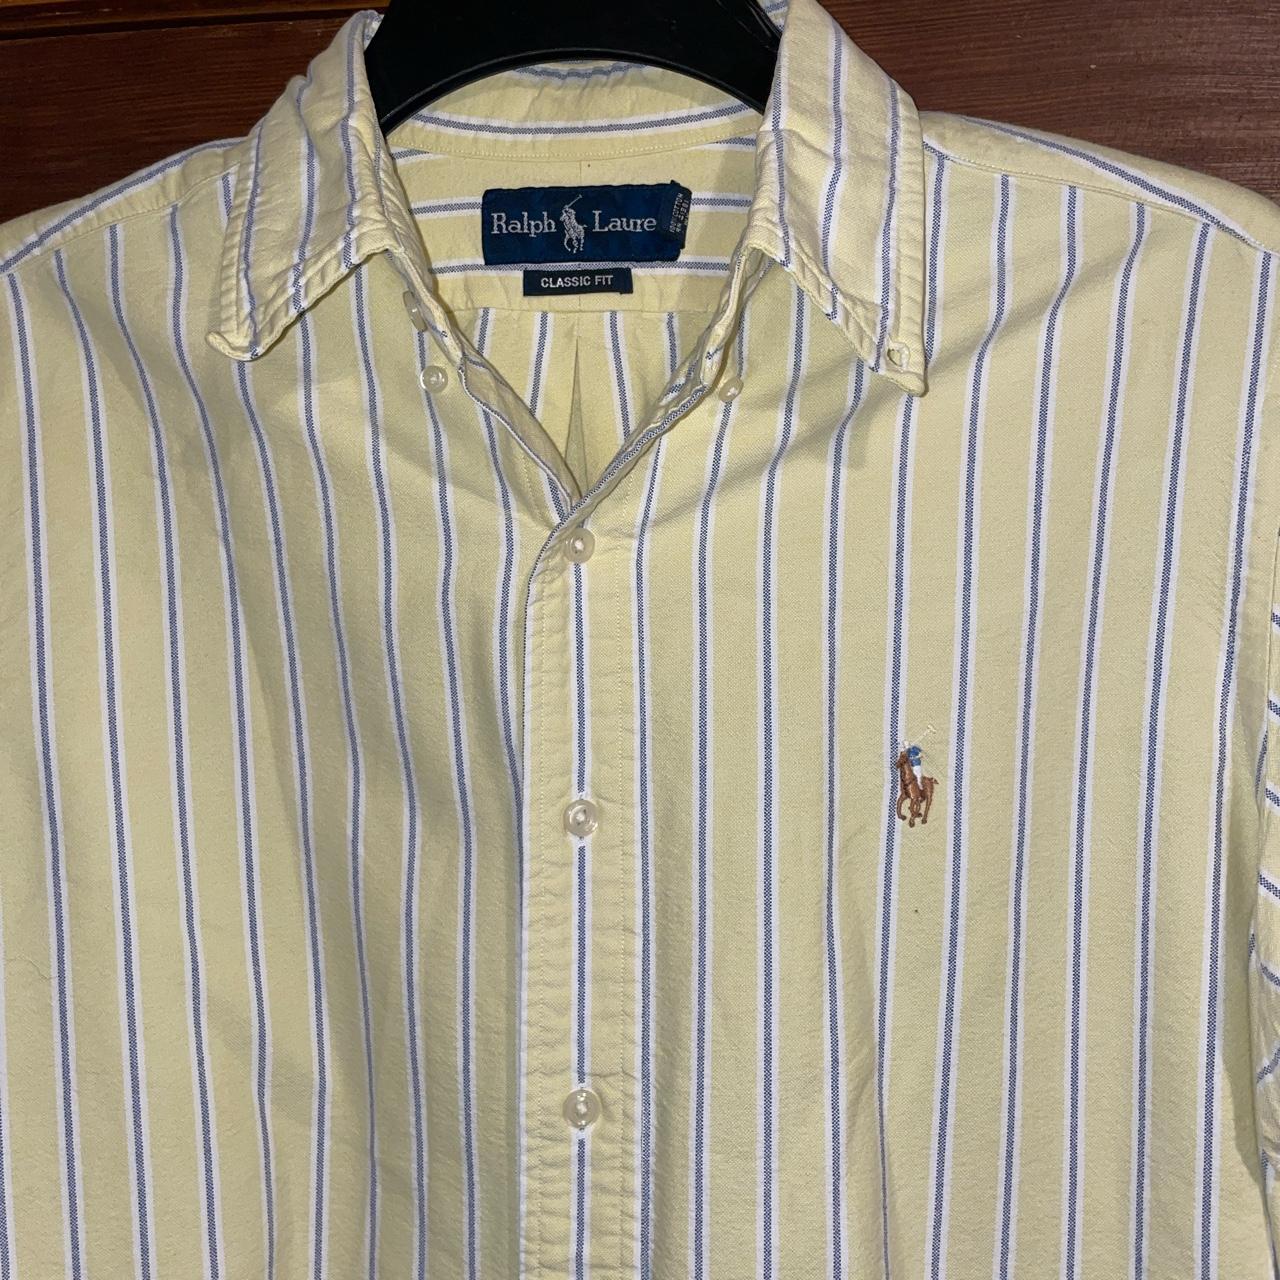 Amazing Vintage 90s Ralph Lauren Striped shirt In a... - Depop